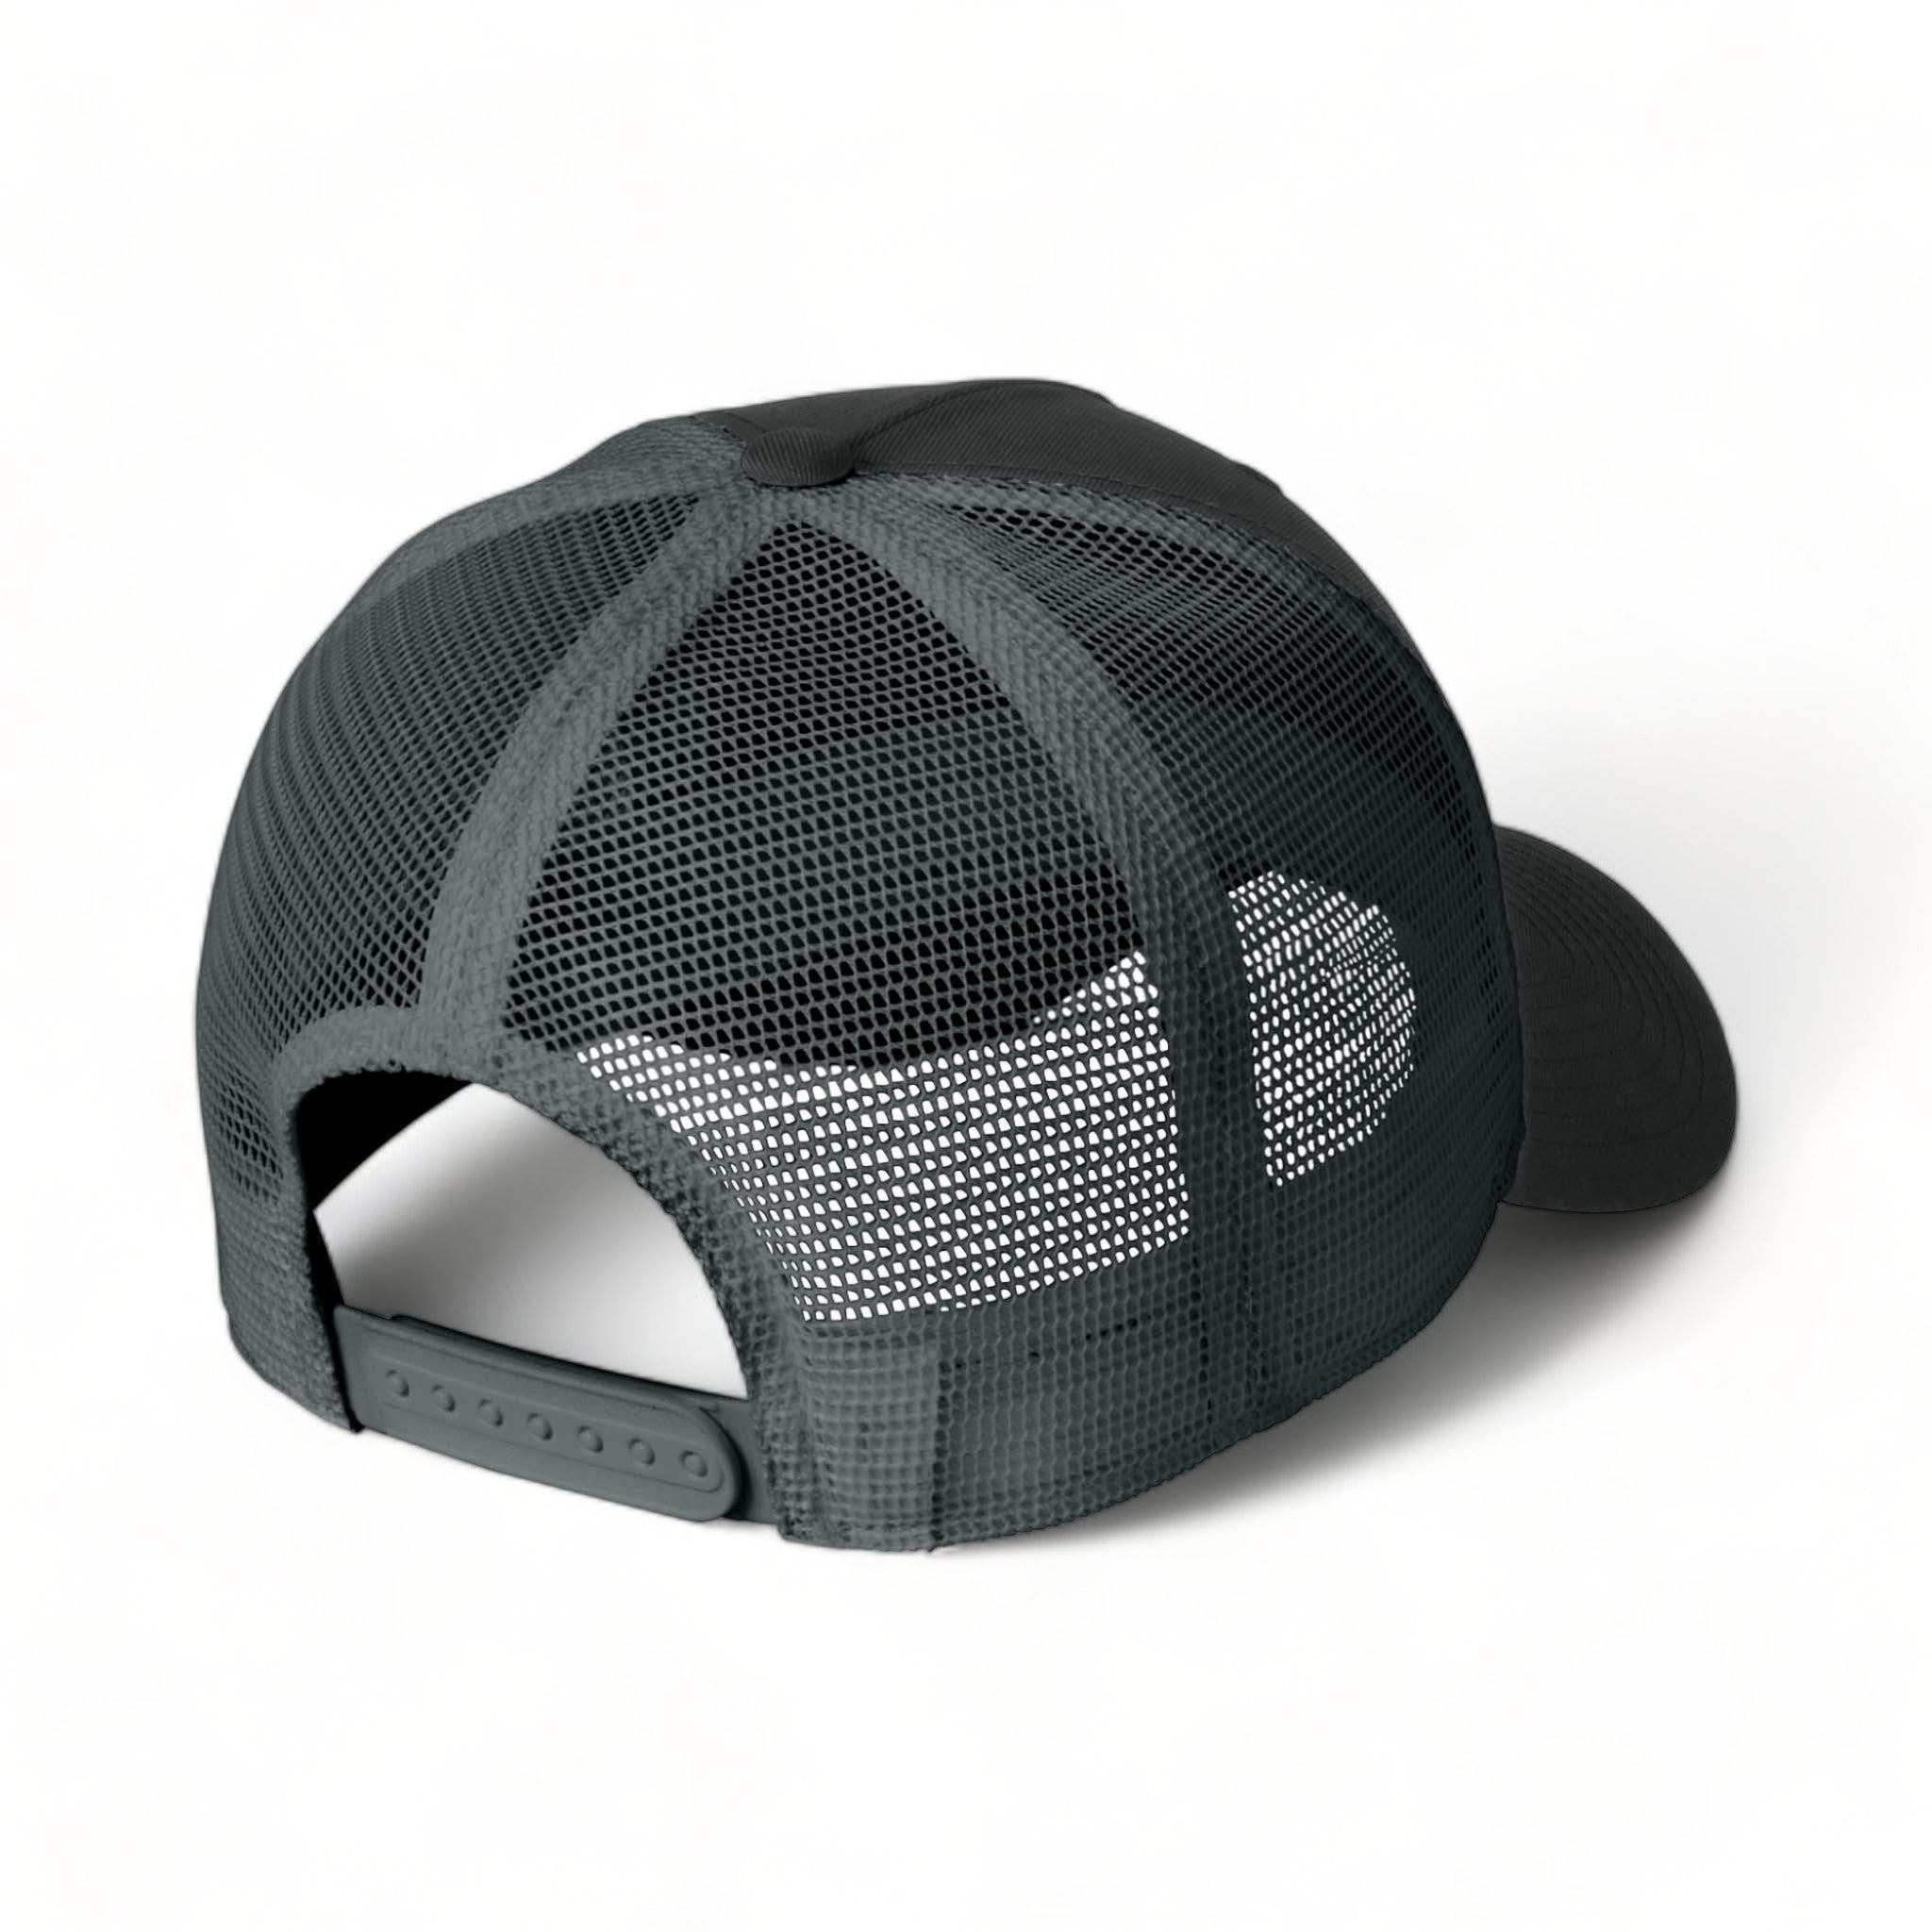 Back view of Nike NKFN9893 custom hat in black and dark grey